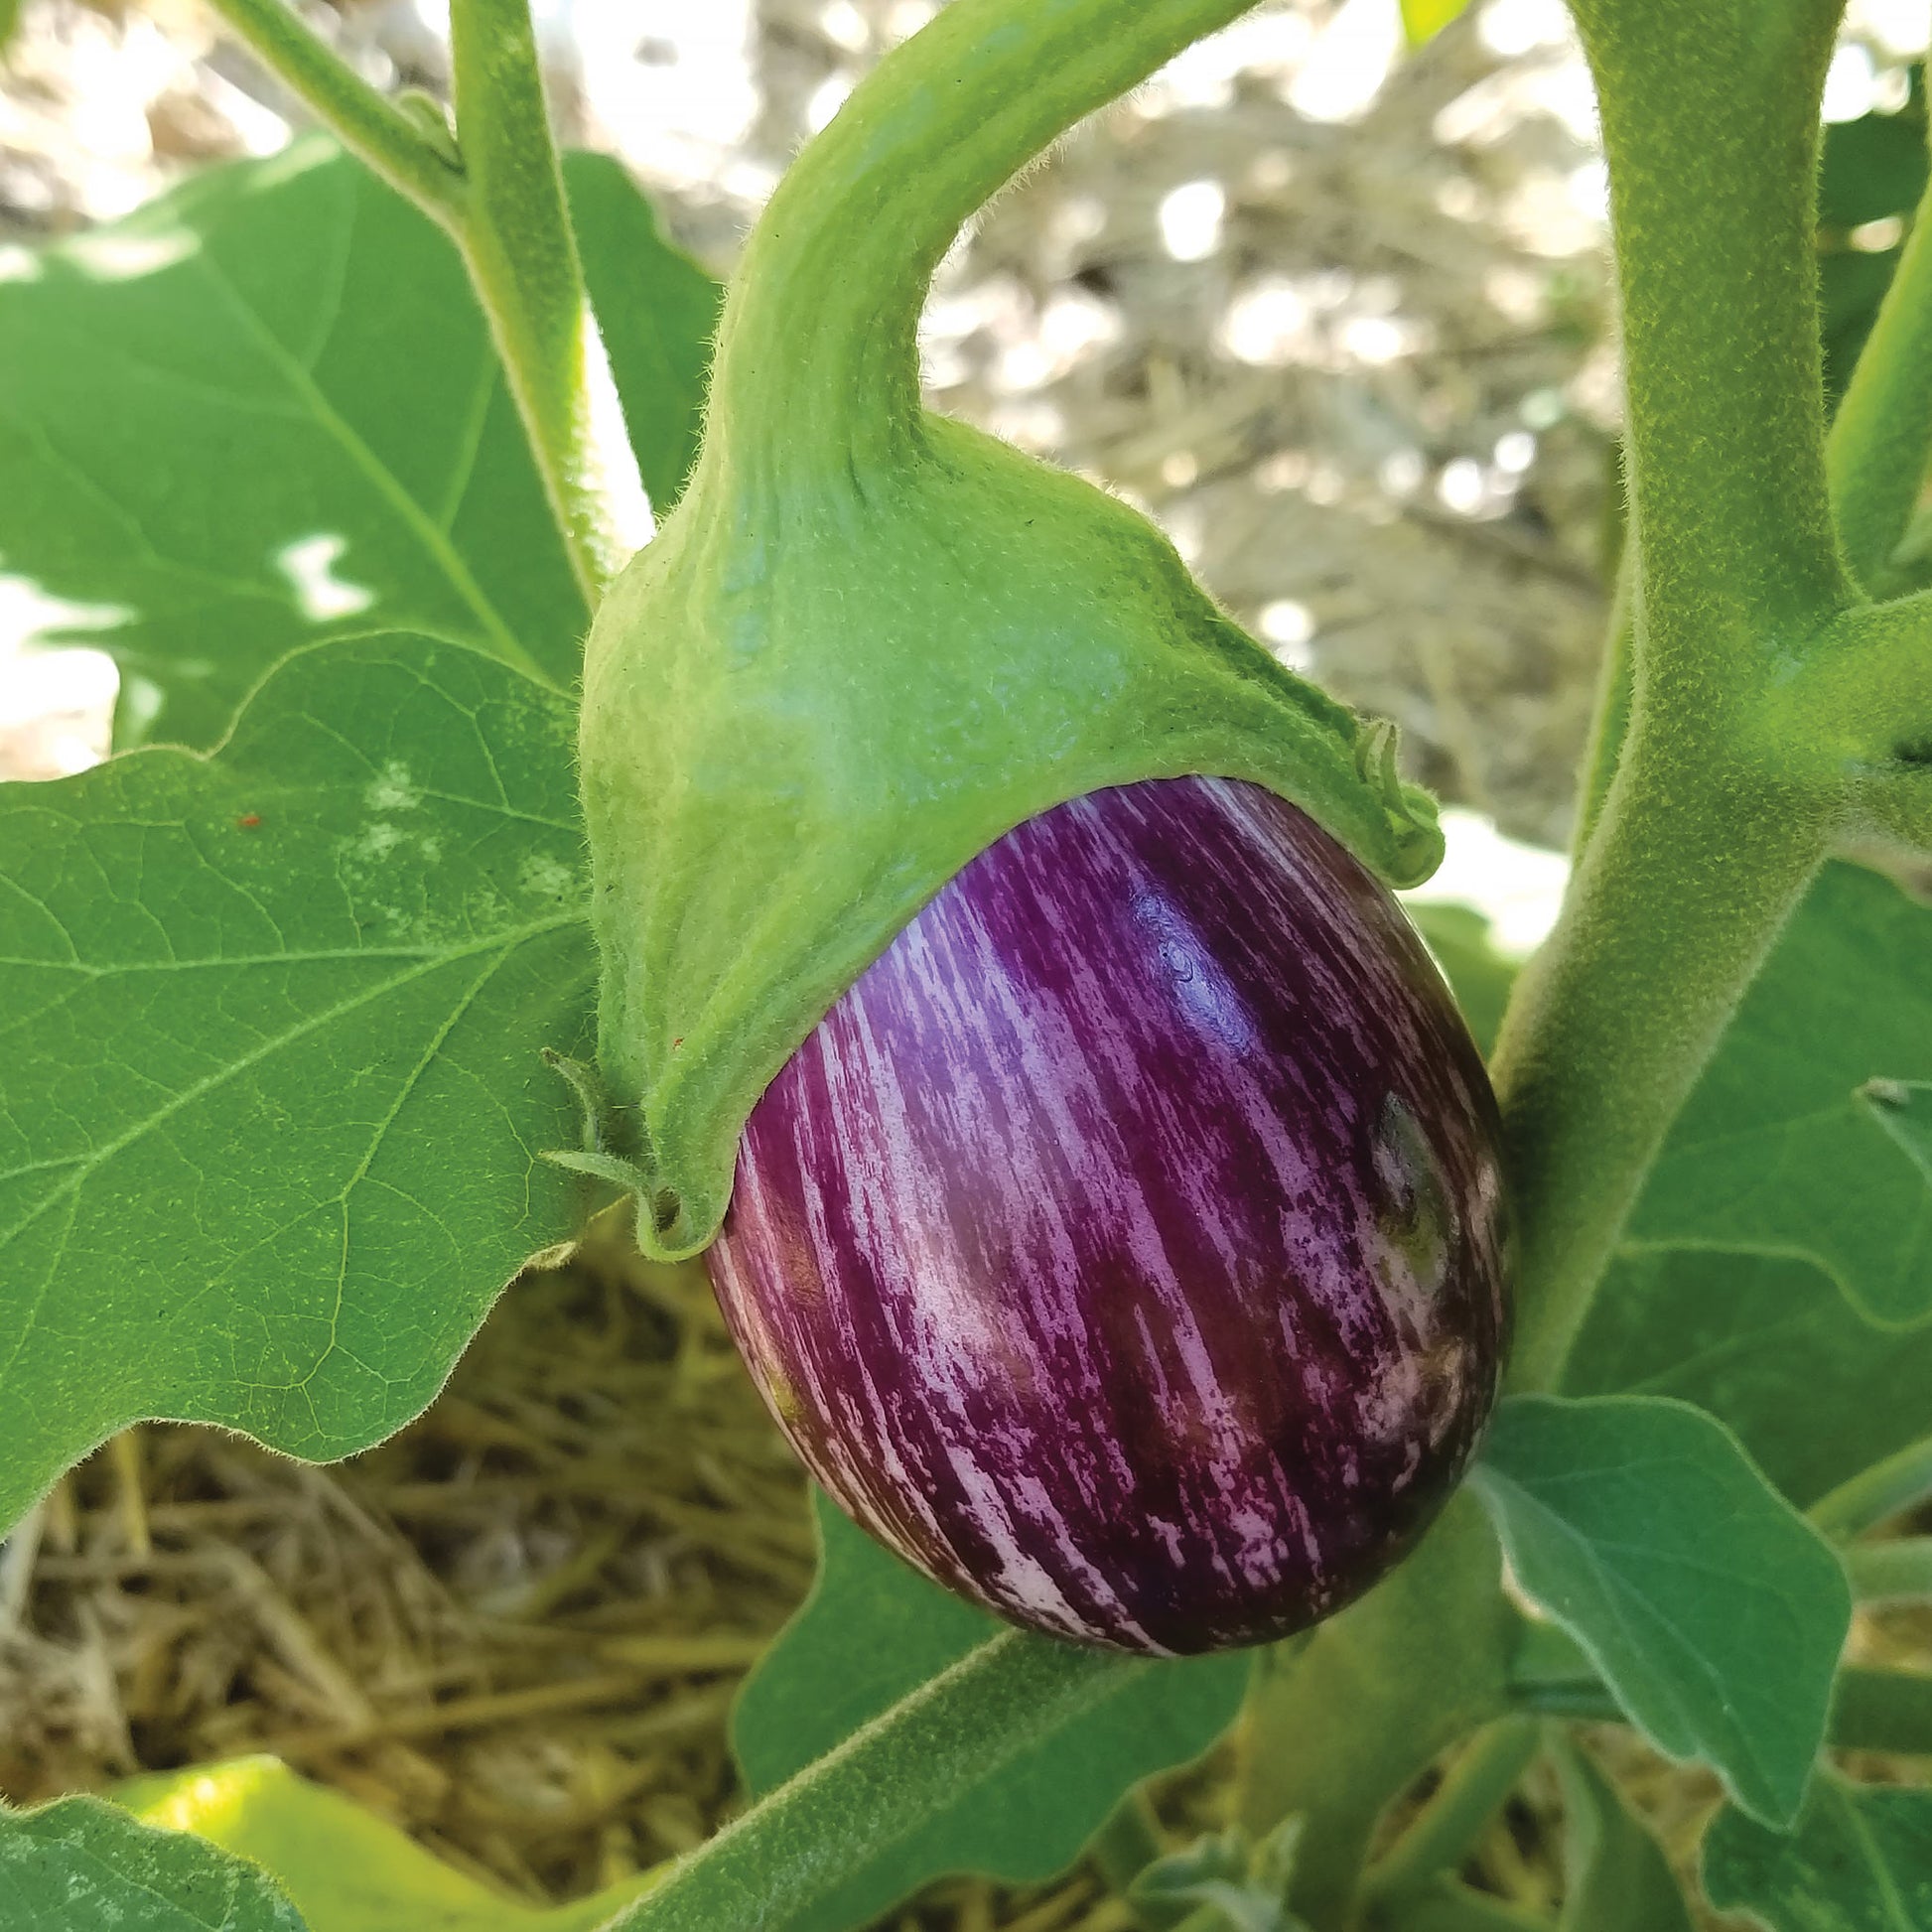 Bella Stripe F1 Hybrid Eggplant